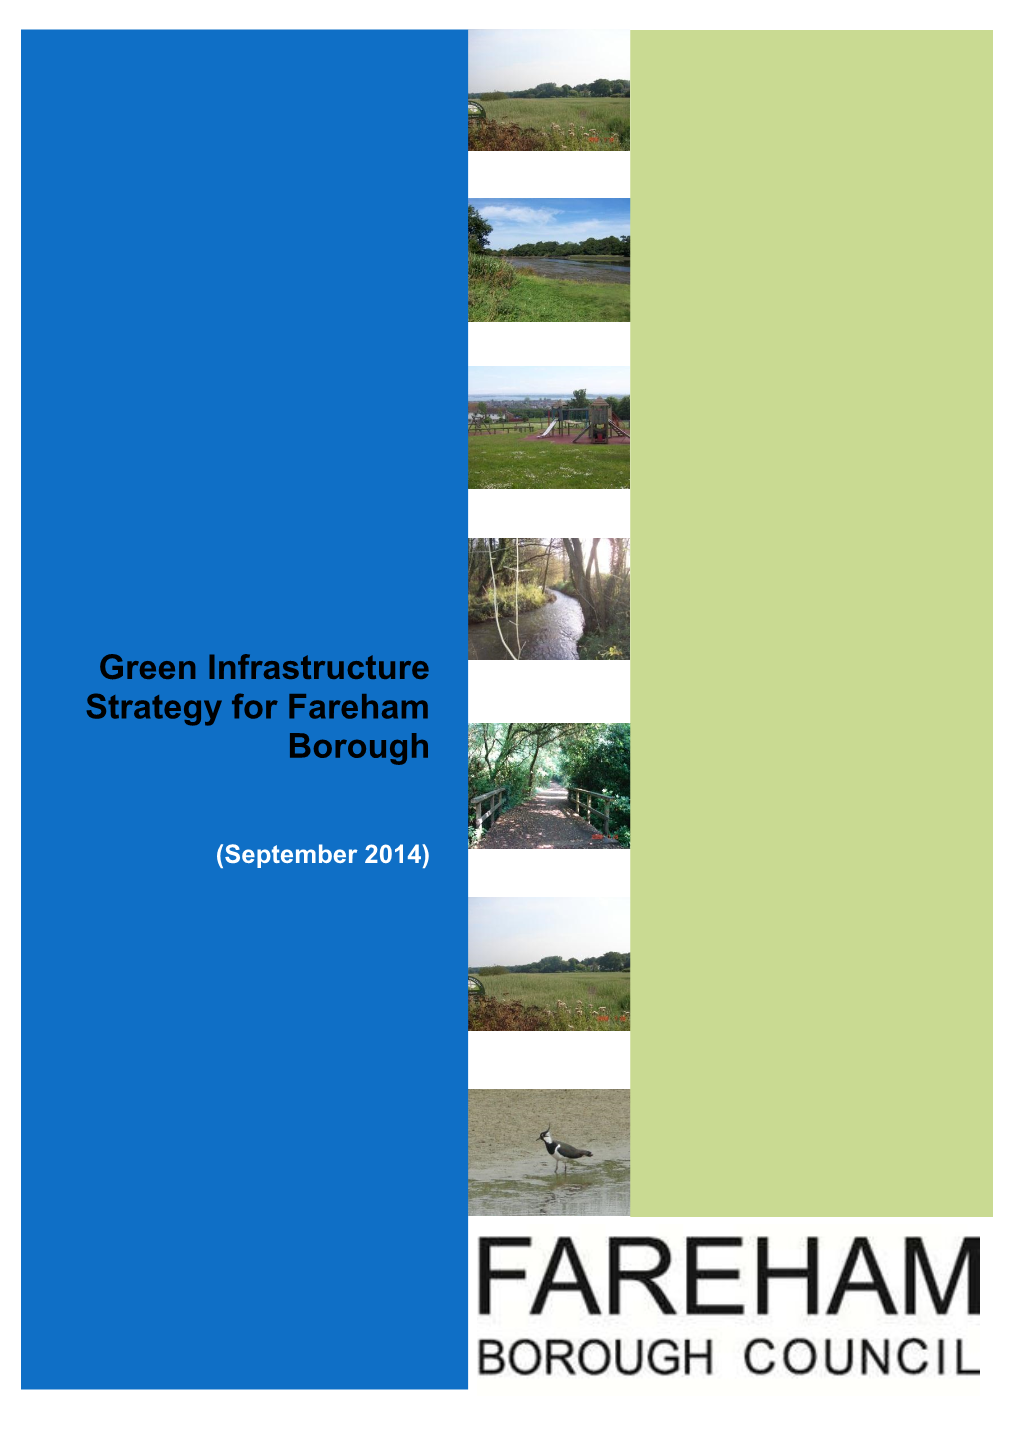 Green Infrastructure Strategy for Fareham Borough, September 2014